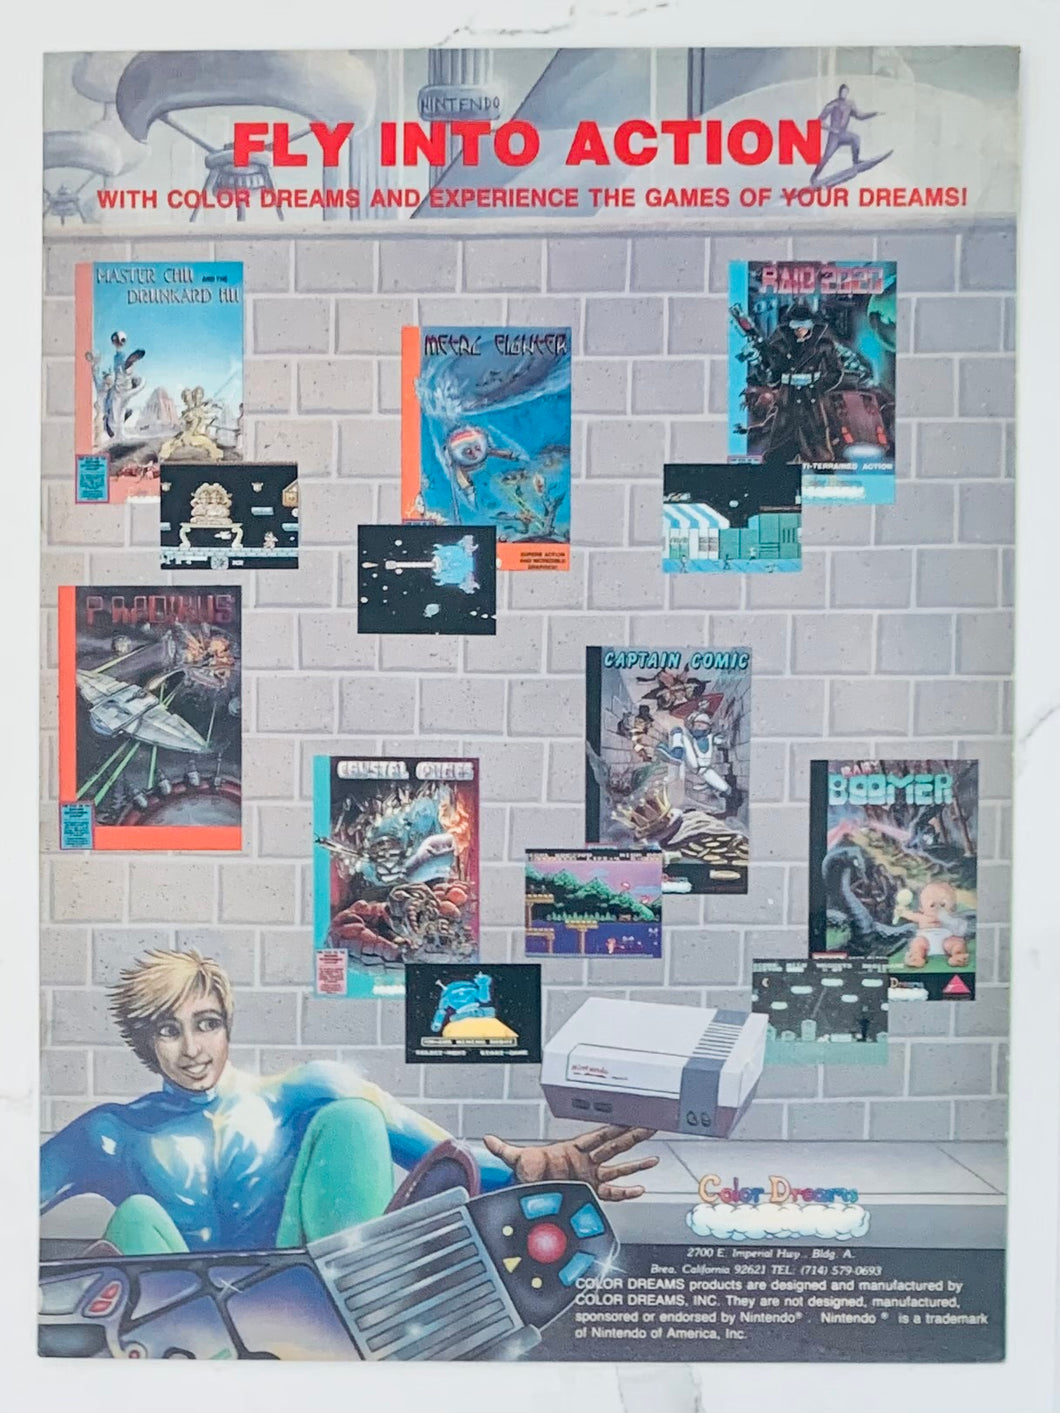 Color Dreams - NES - Original Vintage Advertisement - Print Ads - Laminated A4 Poster